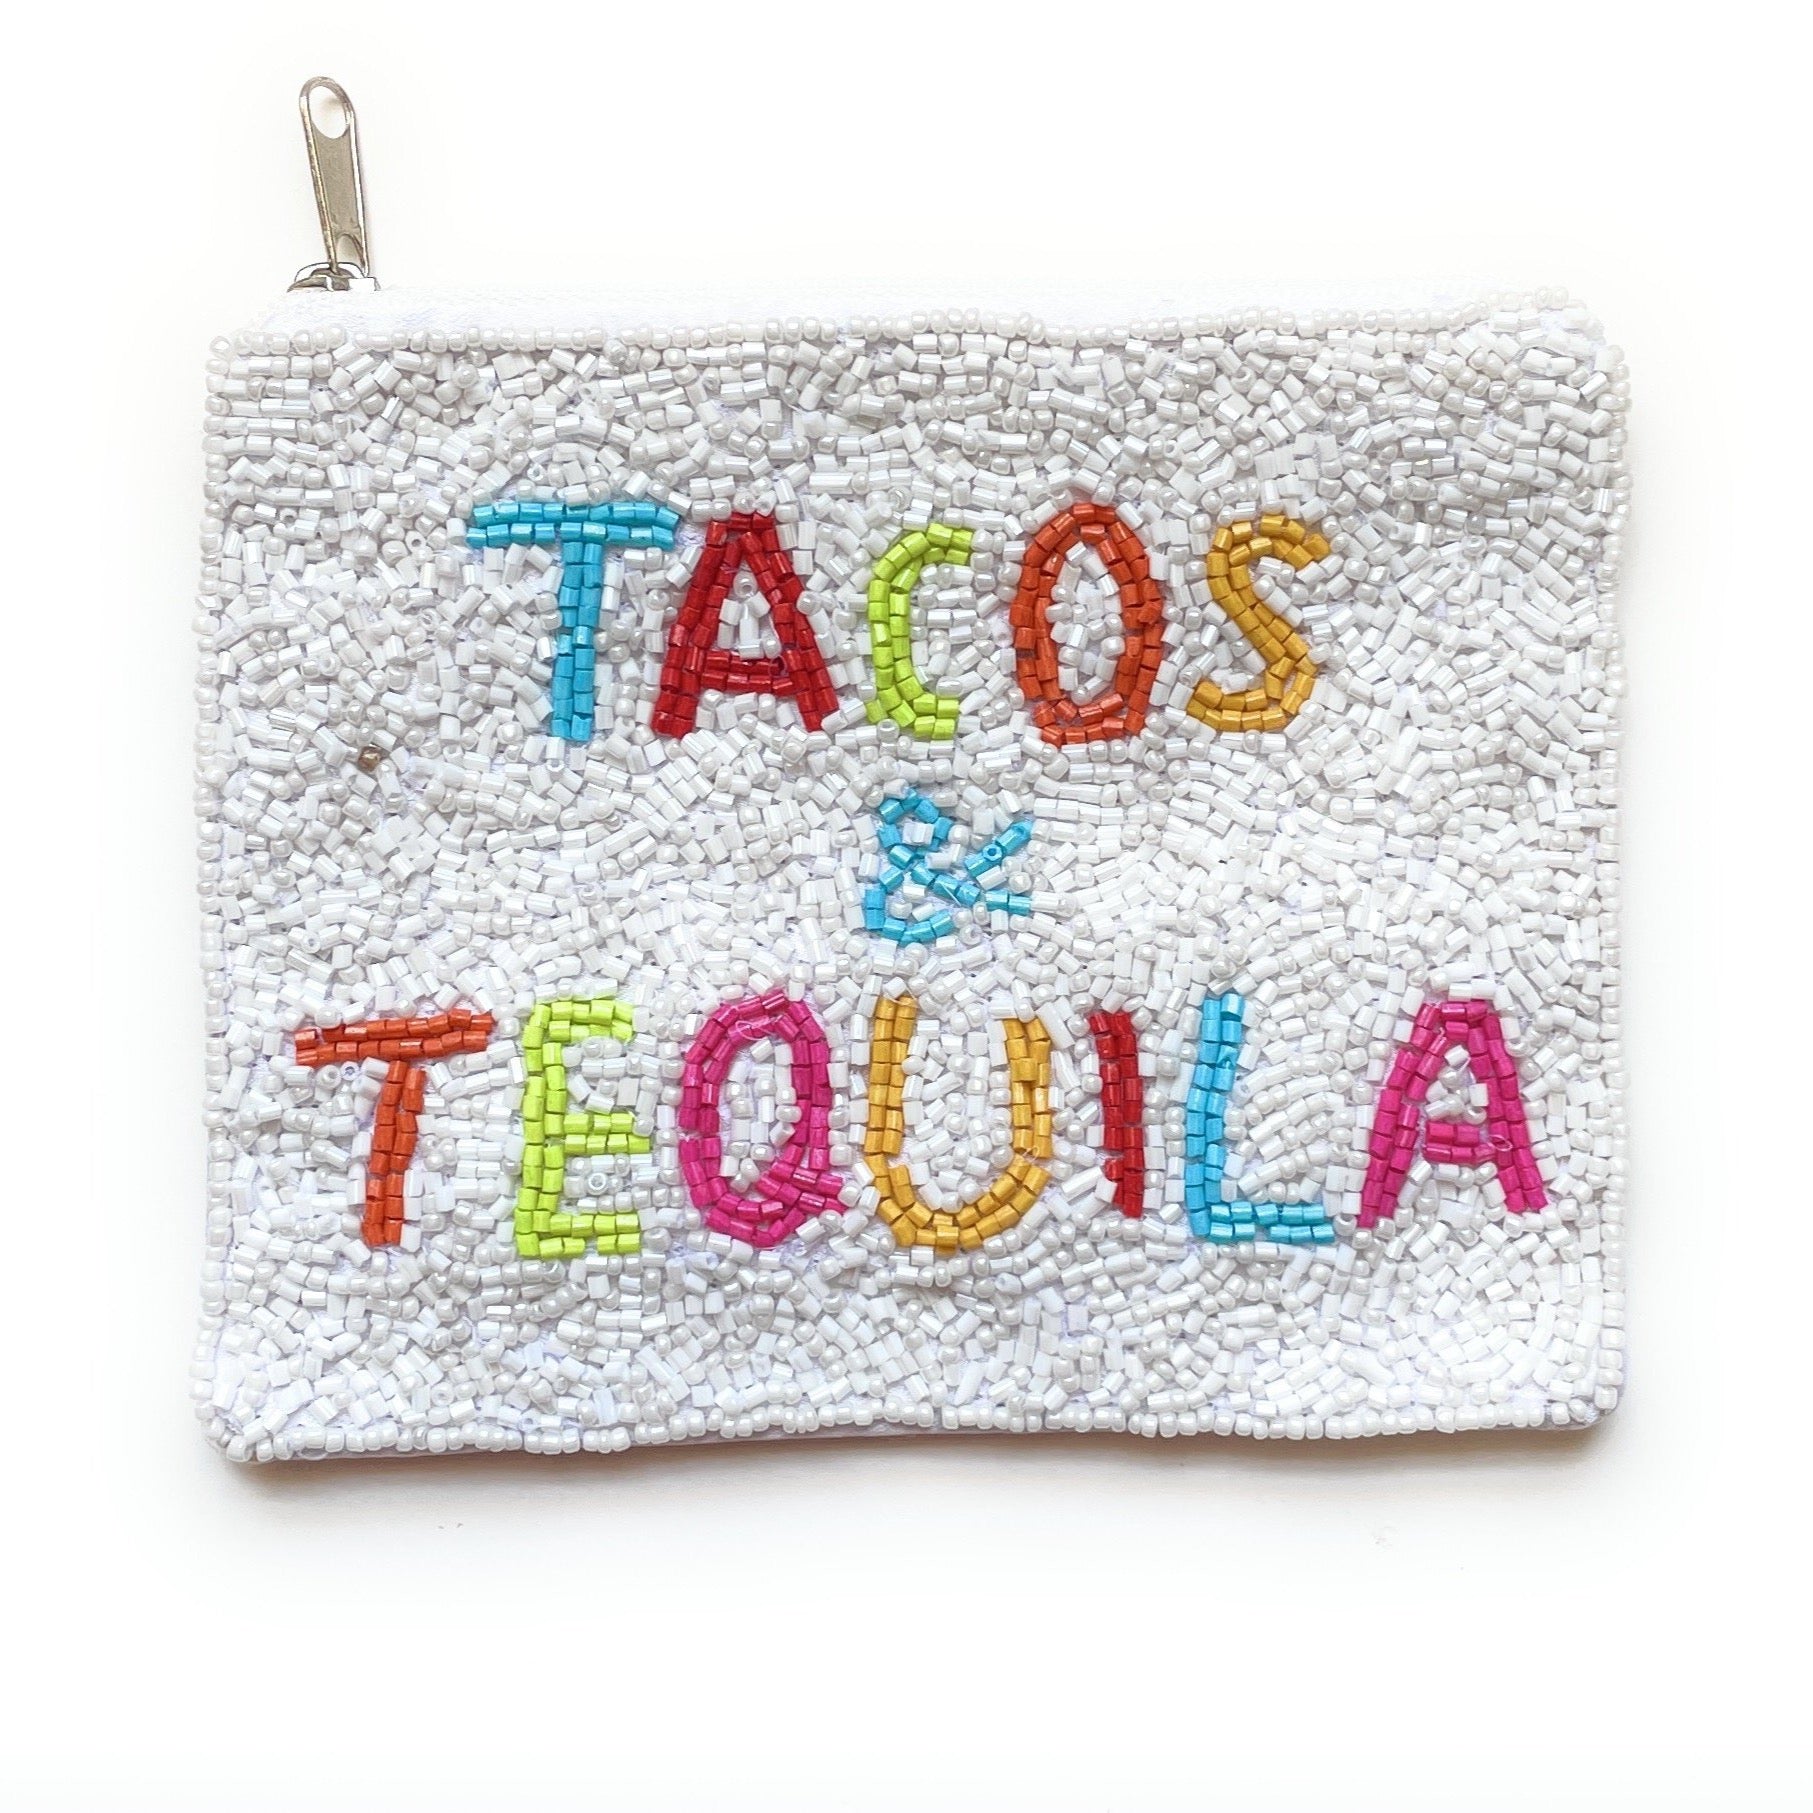 Lux de Ville - Our Fun Taco includes a Spicy little coin purse